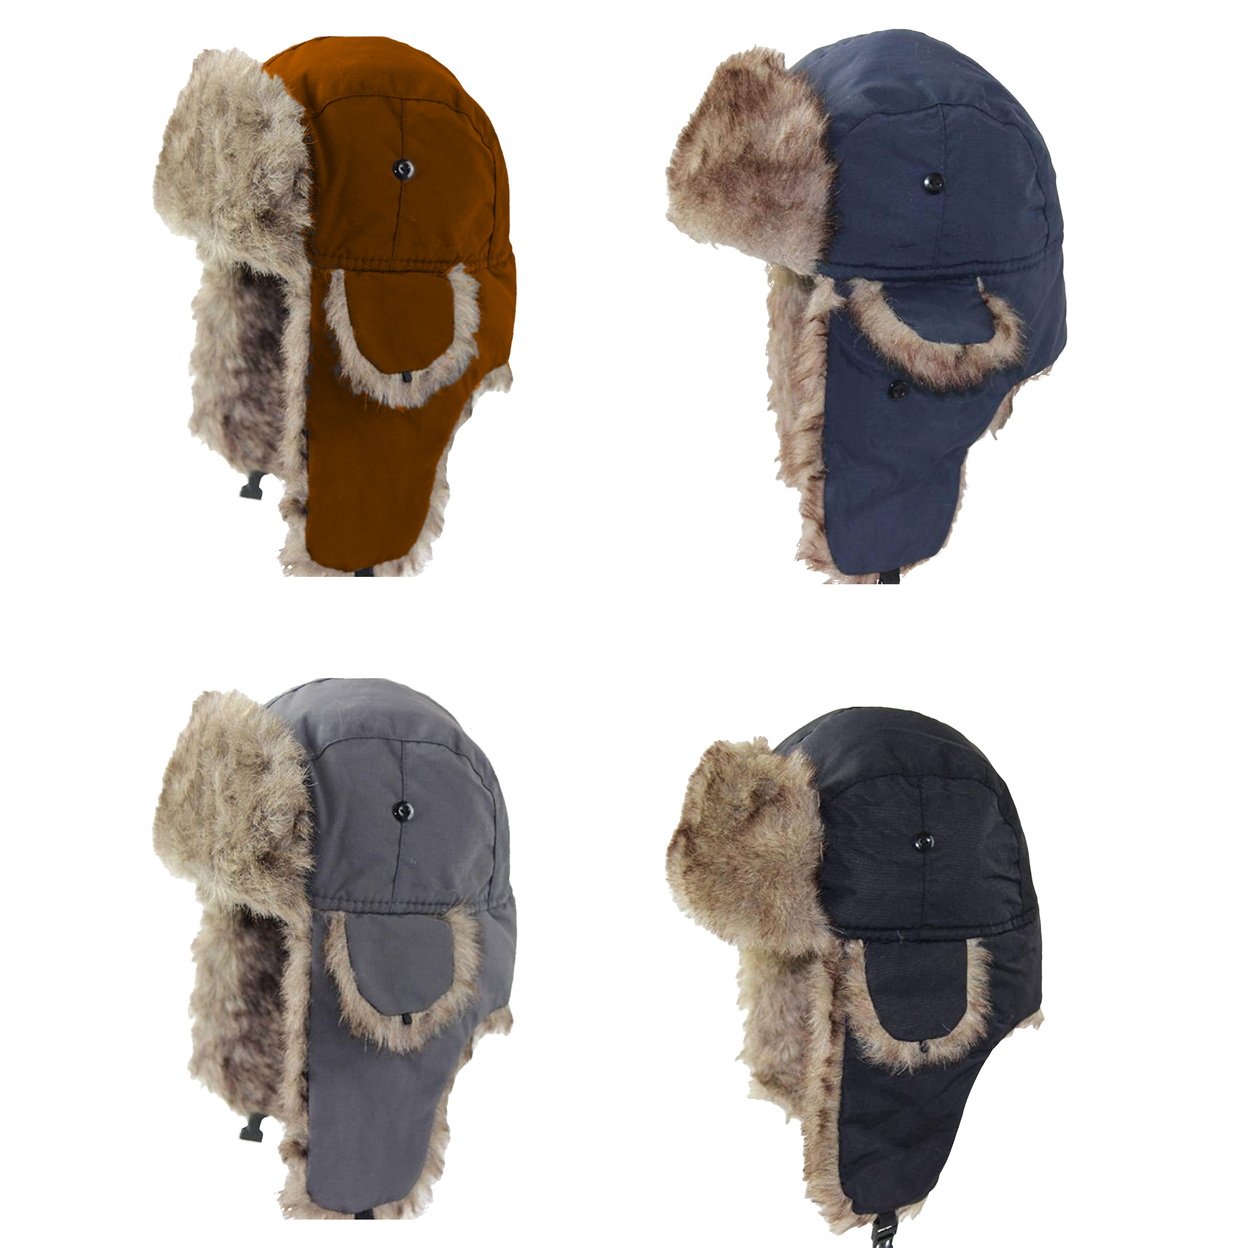 2-Pack: Men's Winter Warm Soft Cozy Russian Ushanka Faux Fur Hat With Ear- Flaps - Black & Black